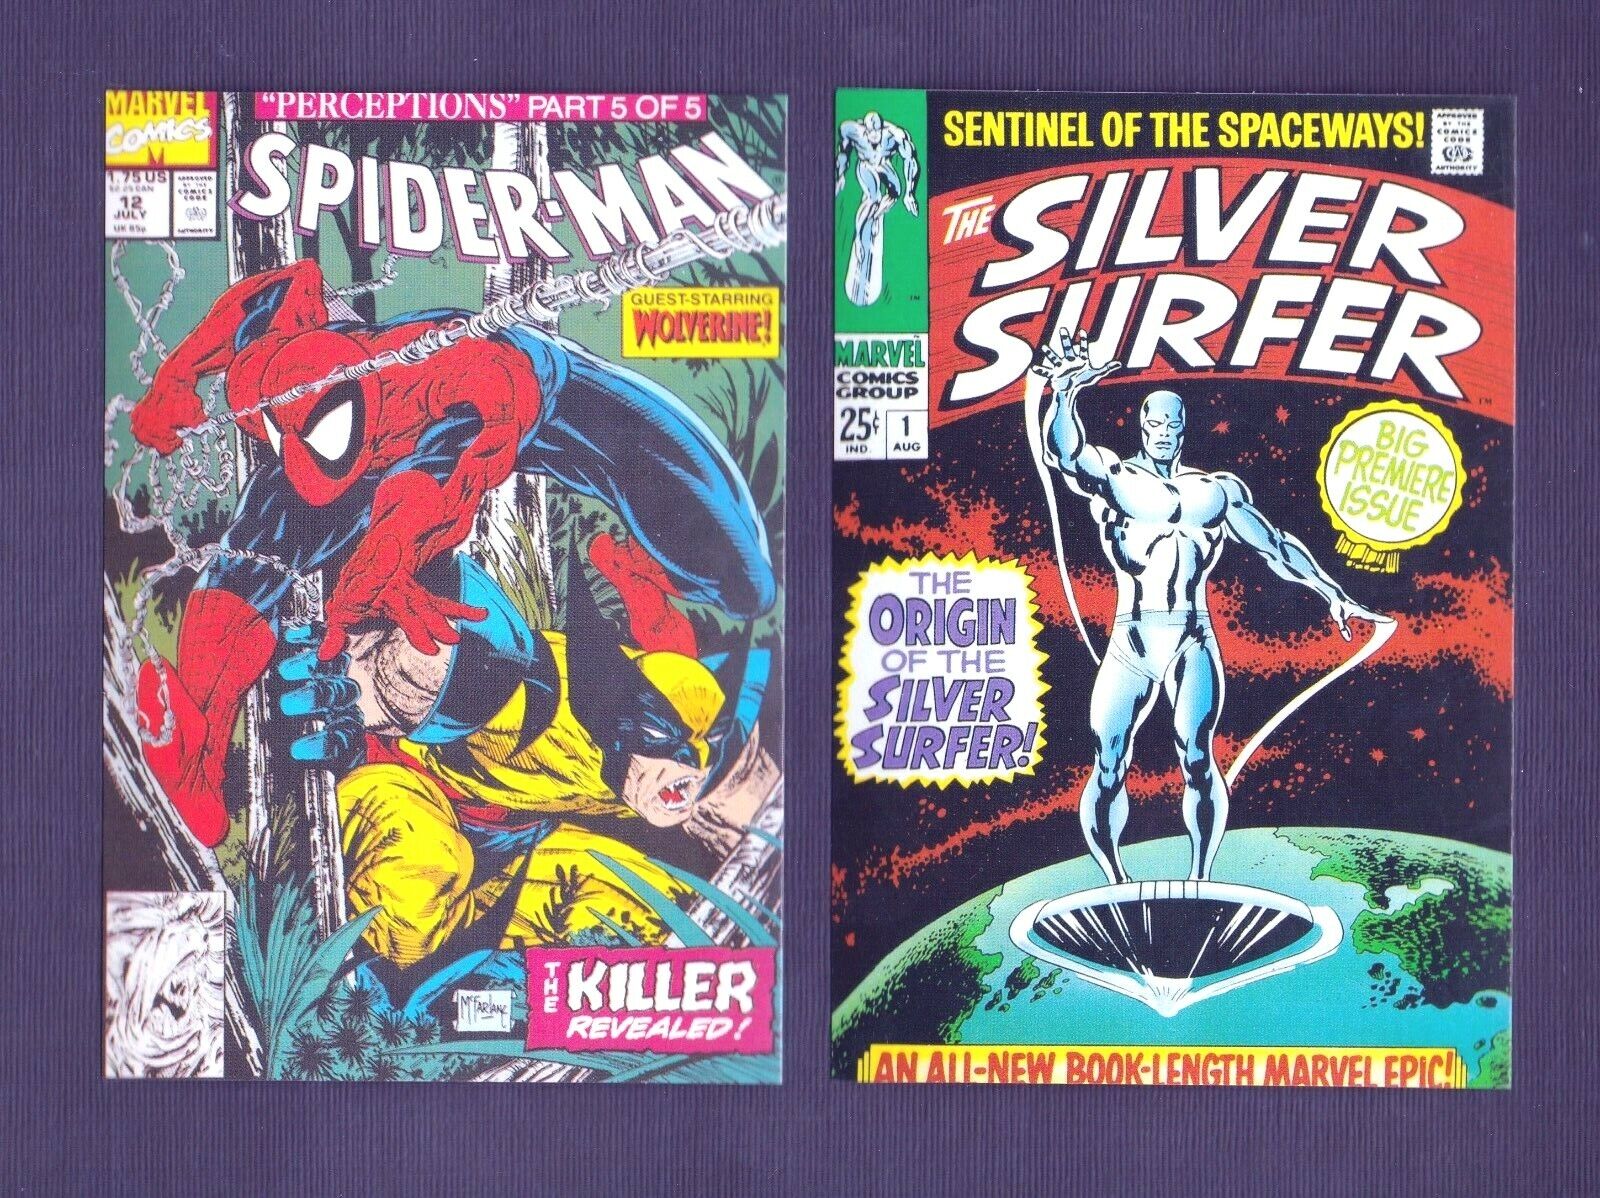 SILVER SURFER #1- PREMIER ISSUE-MARVEL/Spider-man Perceptions Lot of 2 Postcards